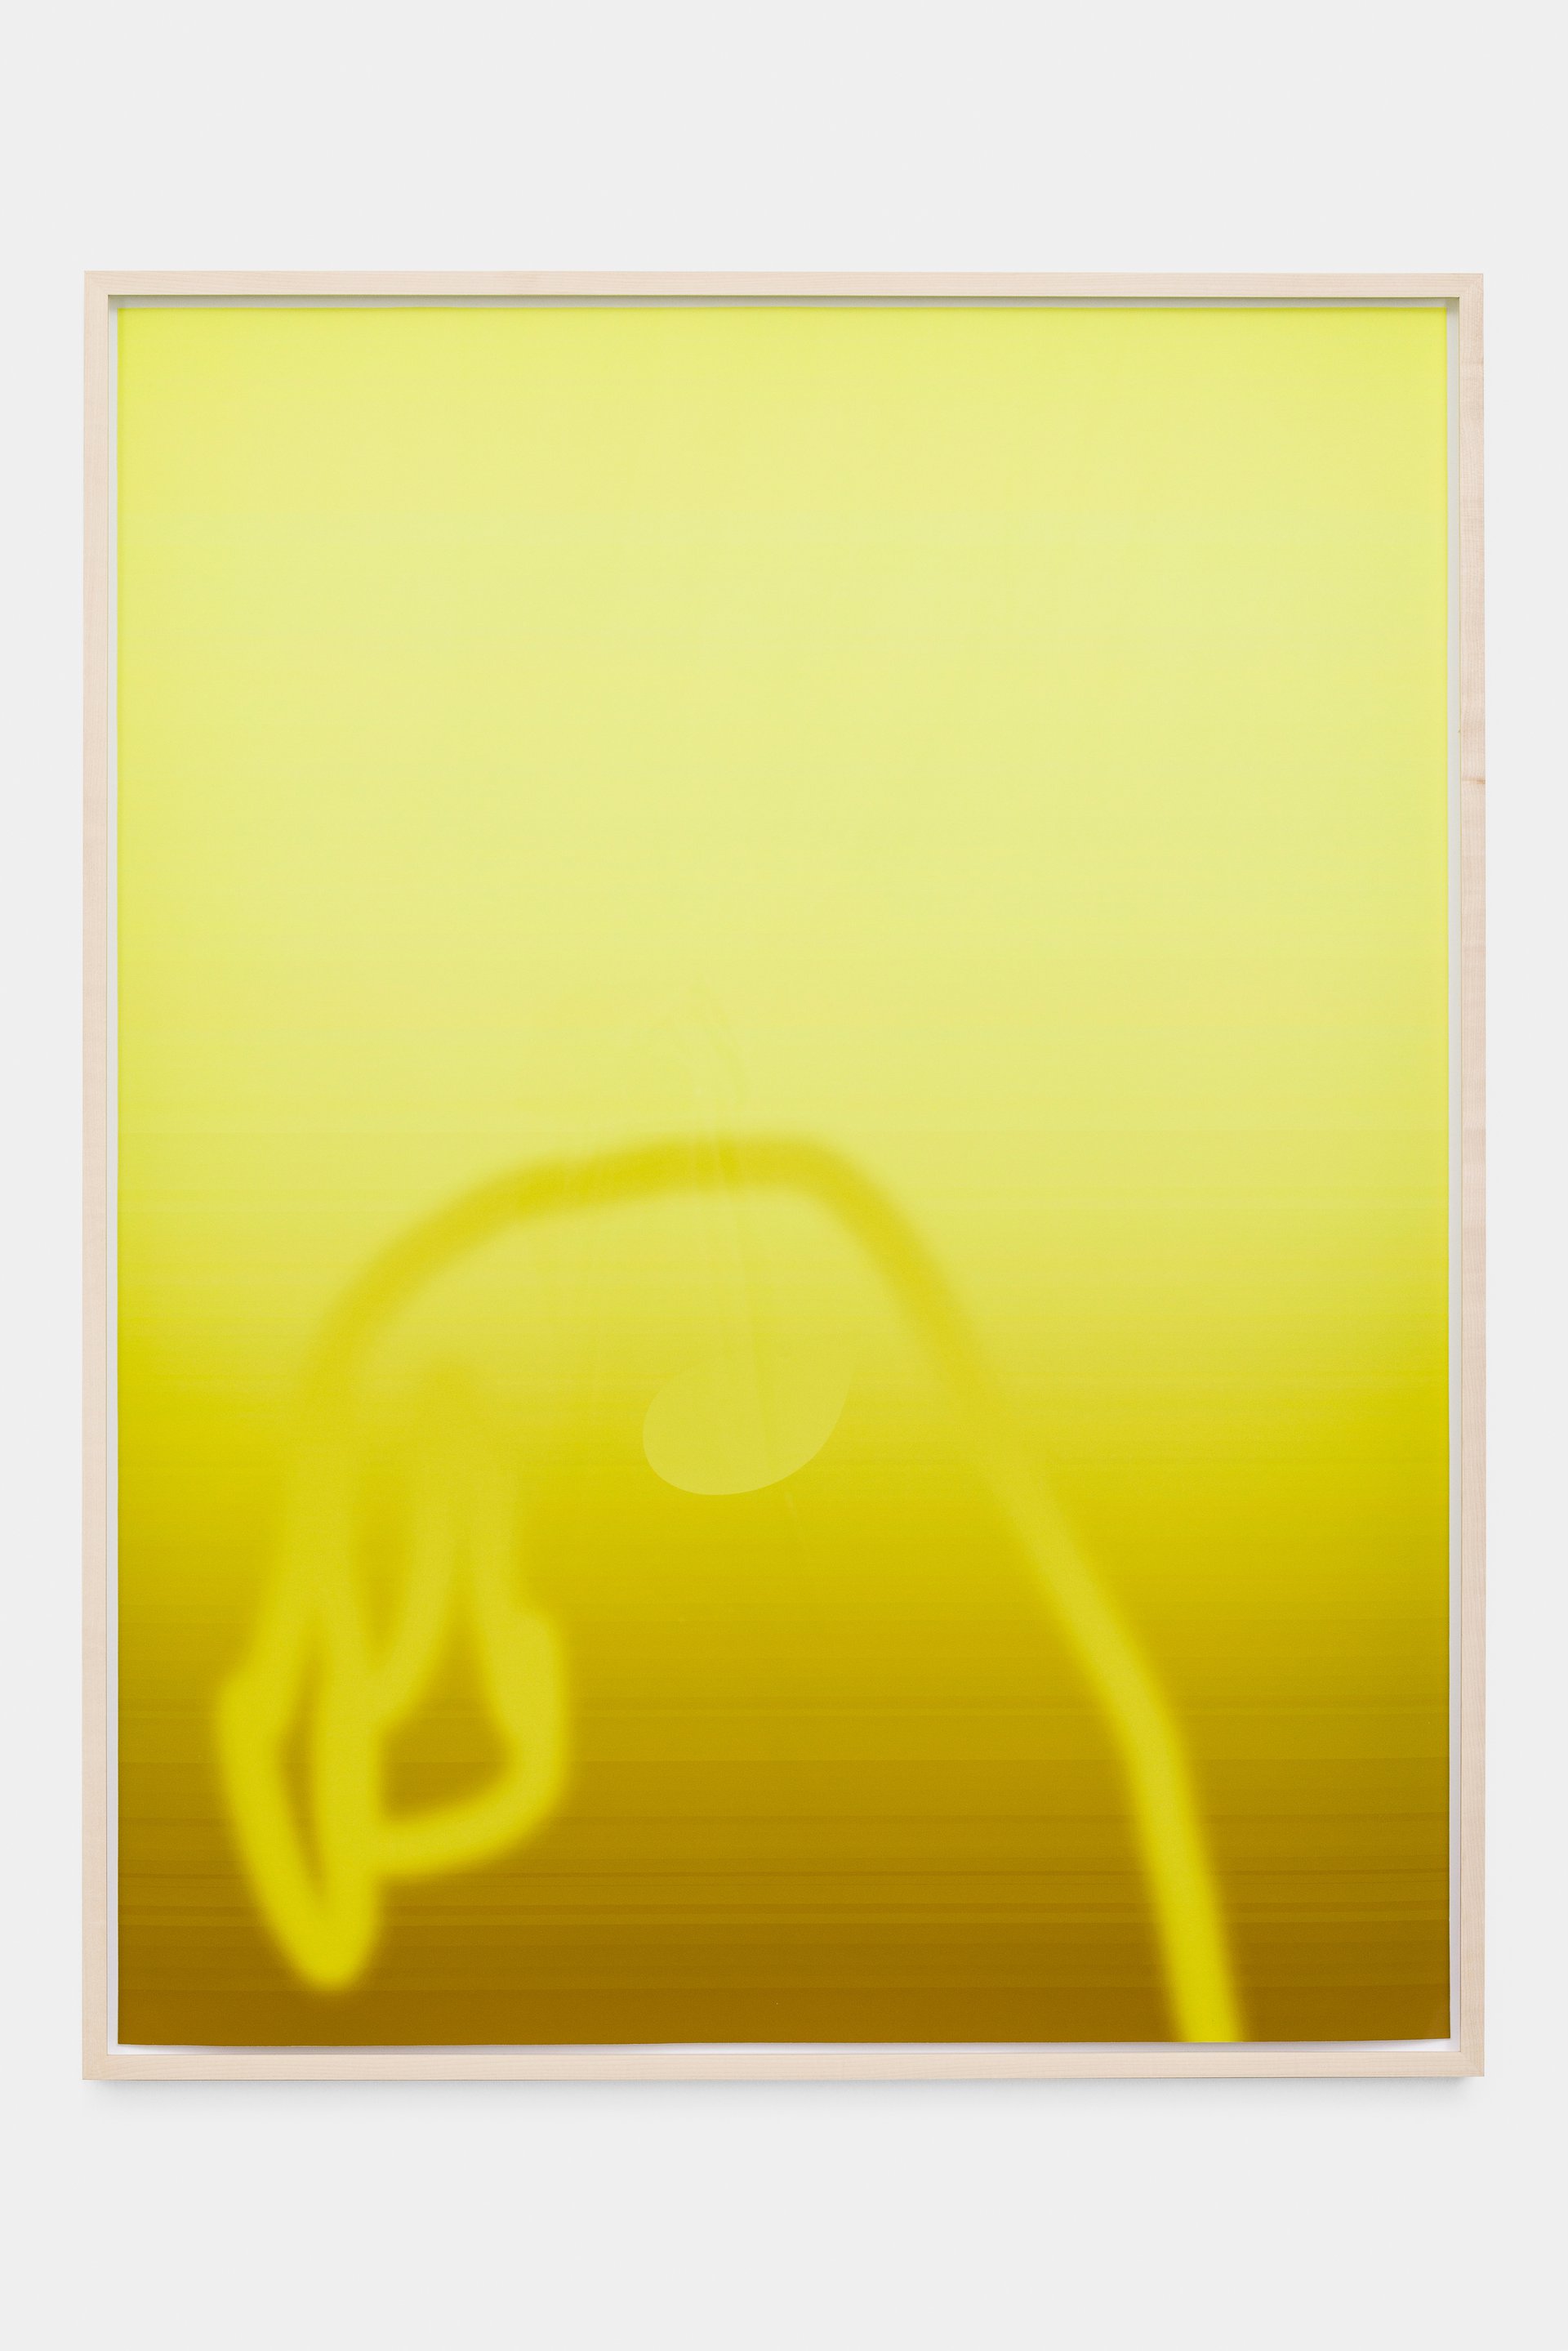 Lisa HolzerObjet petit a (Sundown), 2023Pigment print on cotton paper110 x 83 cm